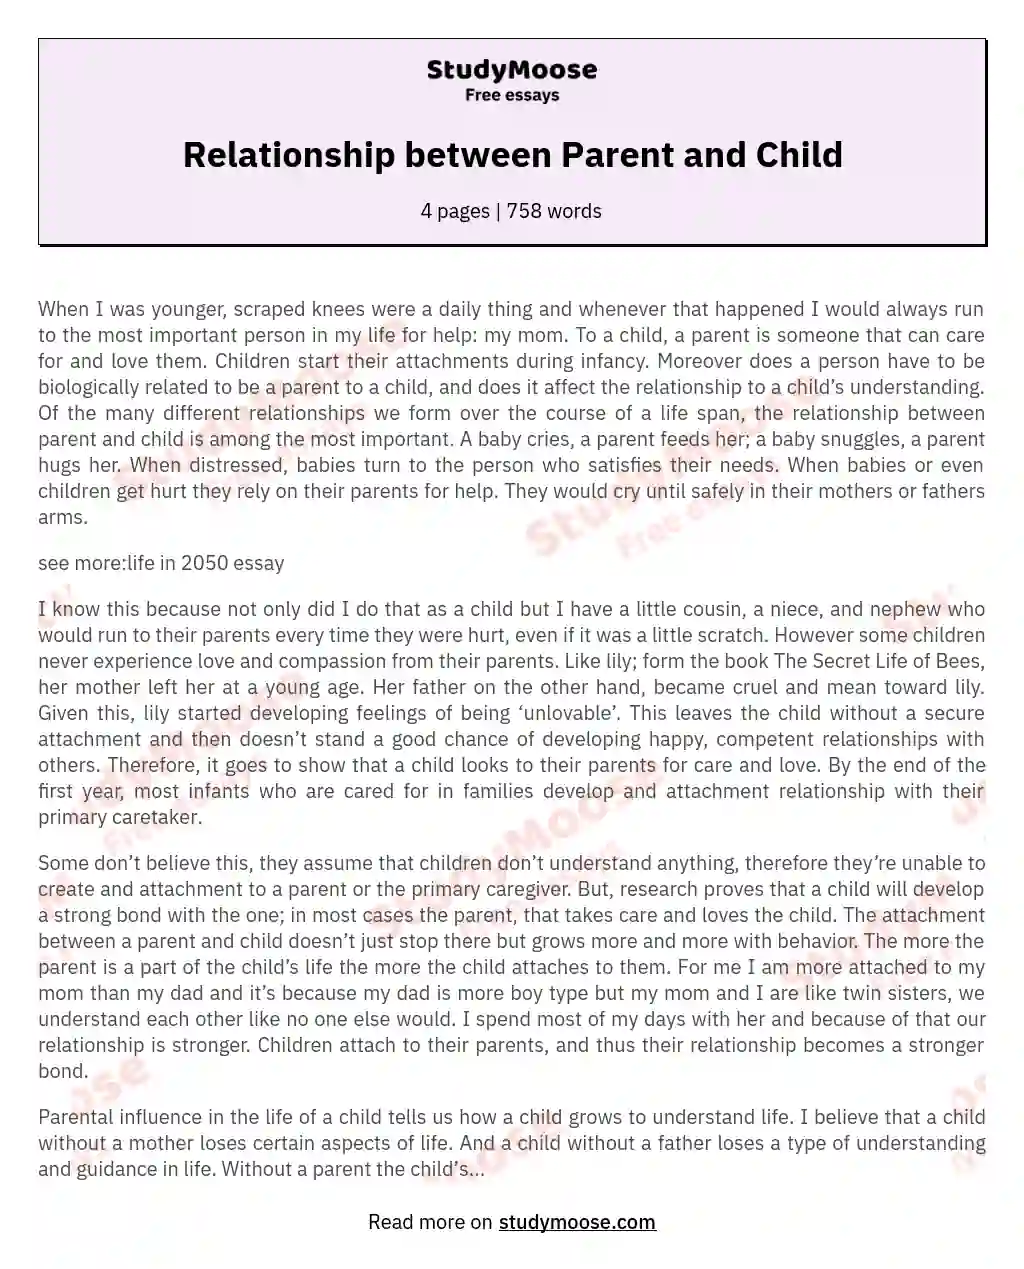 Relationship between Parent and Child essay